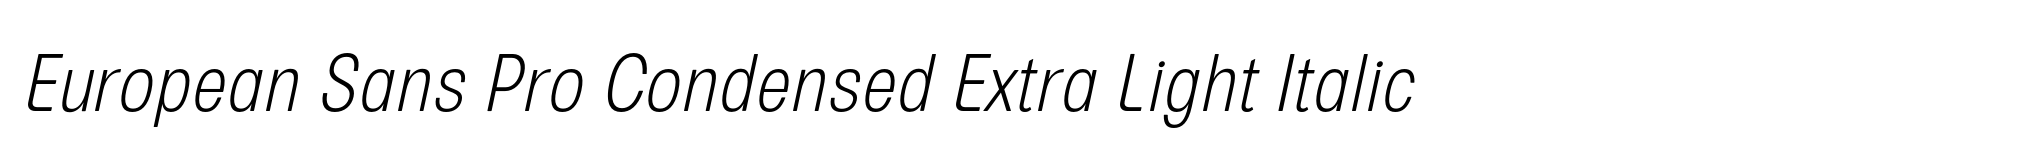 European Sans Pro Condensed Extra Light Italic image